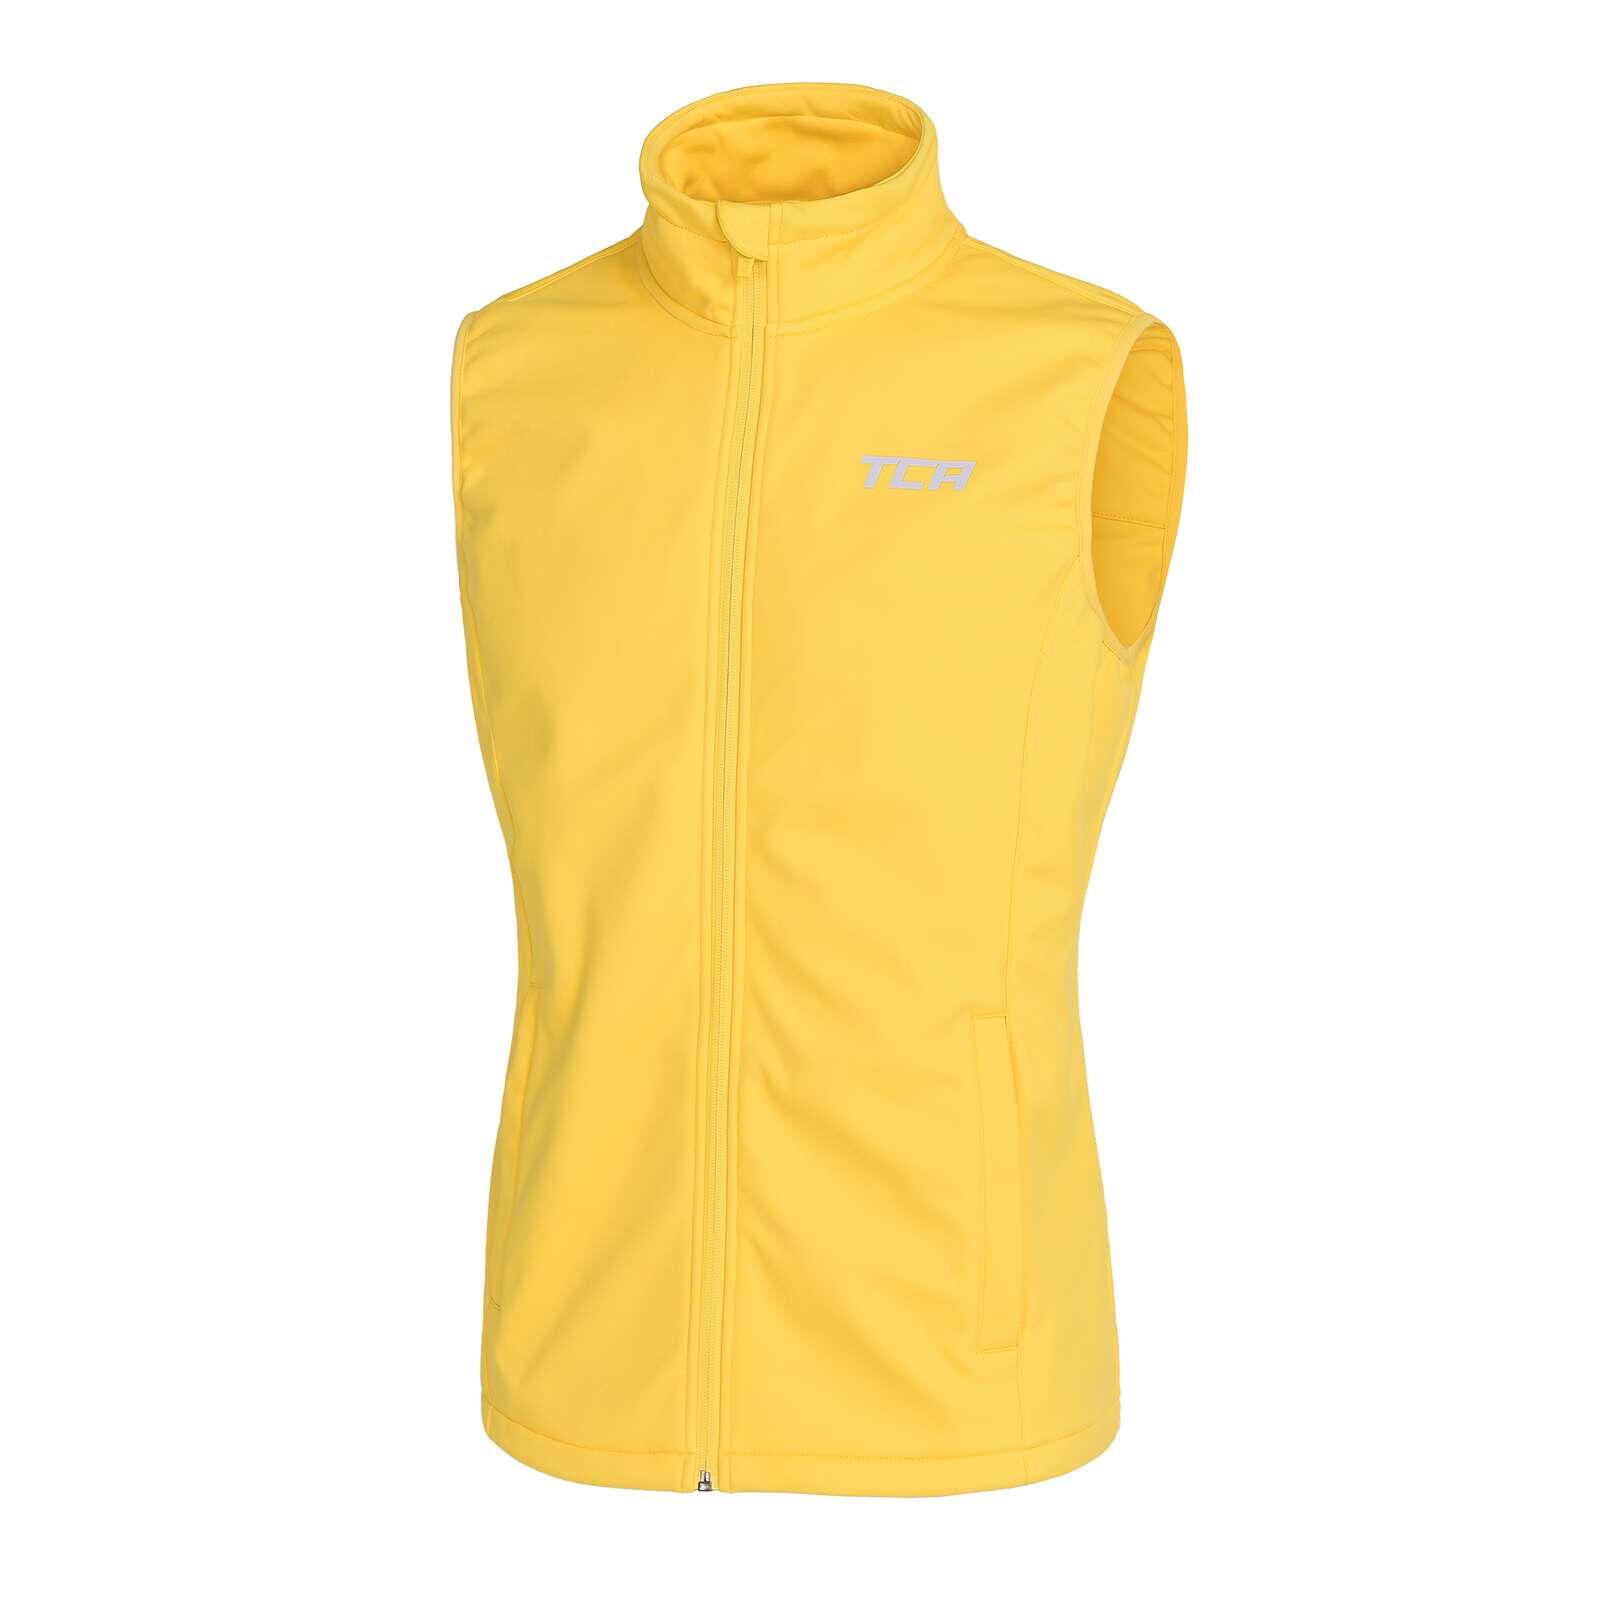 Men's Flyweight Wind-Proof Gilet with Zip Pockets - Vibrant Yellow 1/5